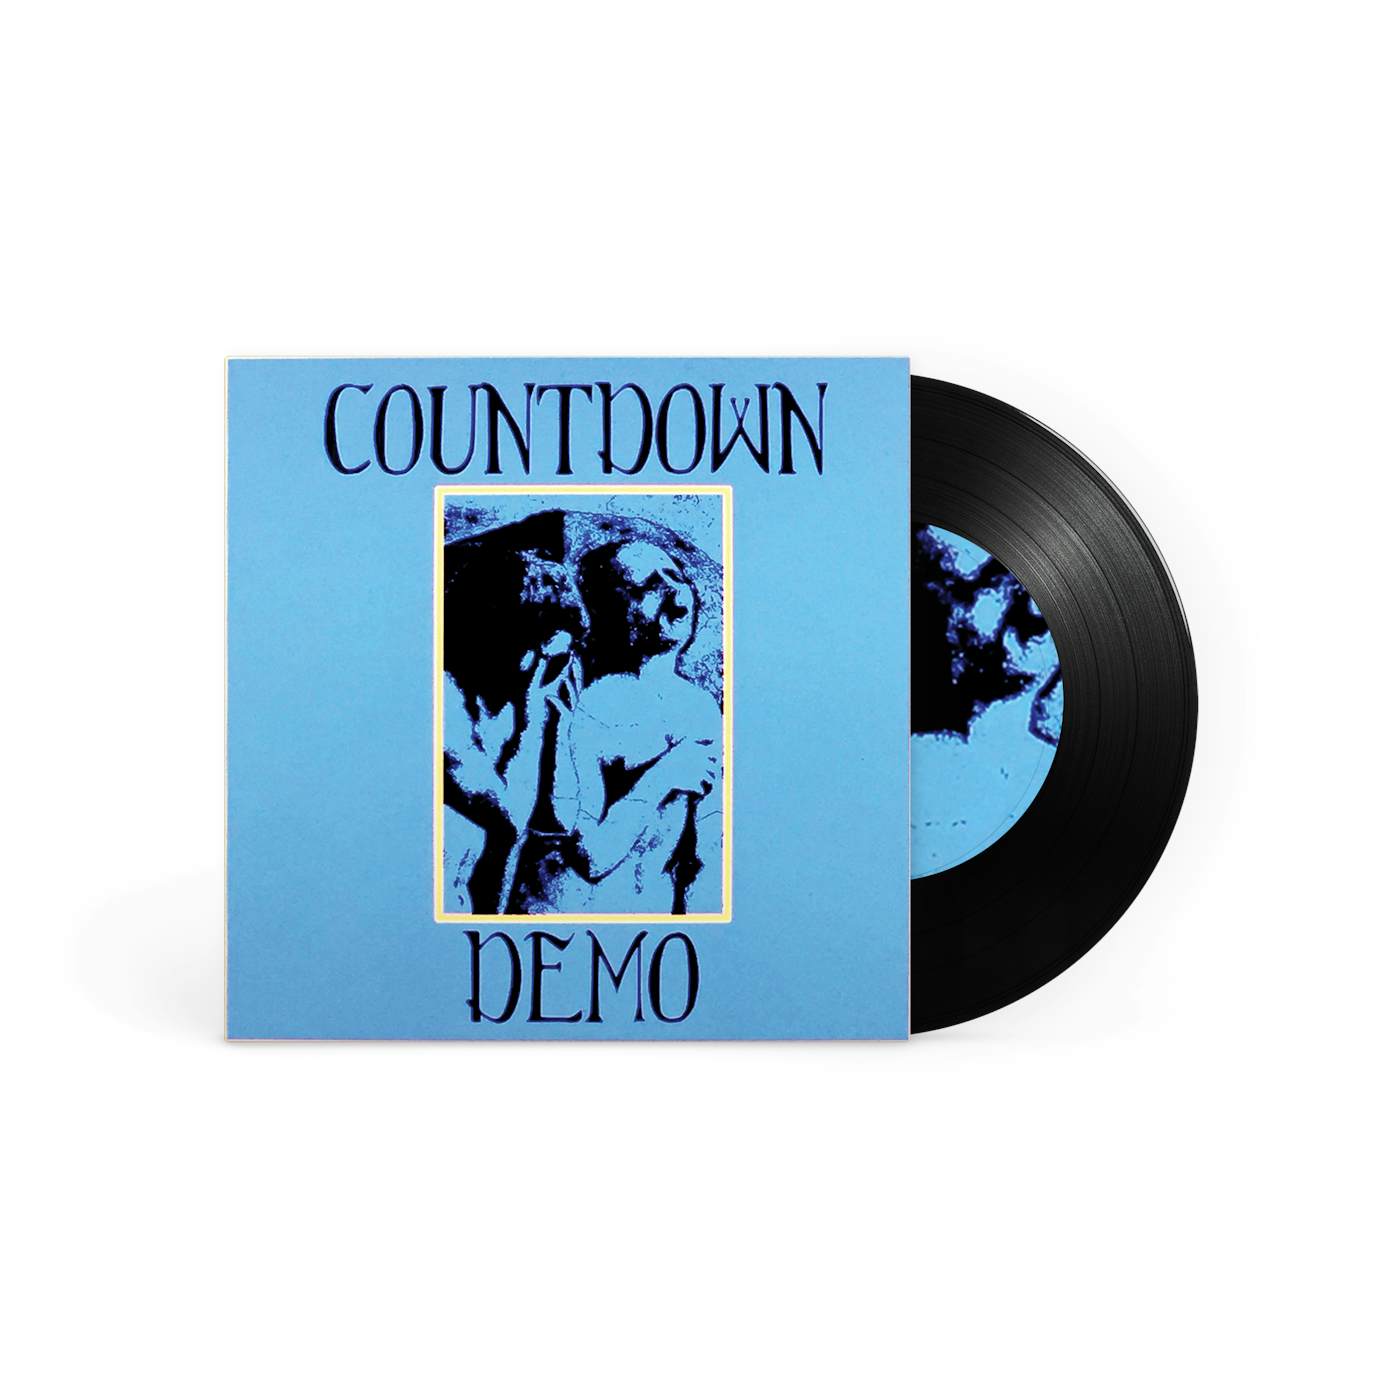 Countdown Demo 7” (Black) (Vinyl)